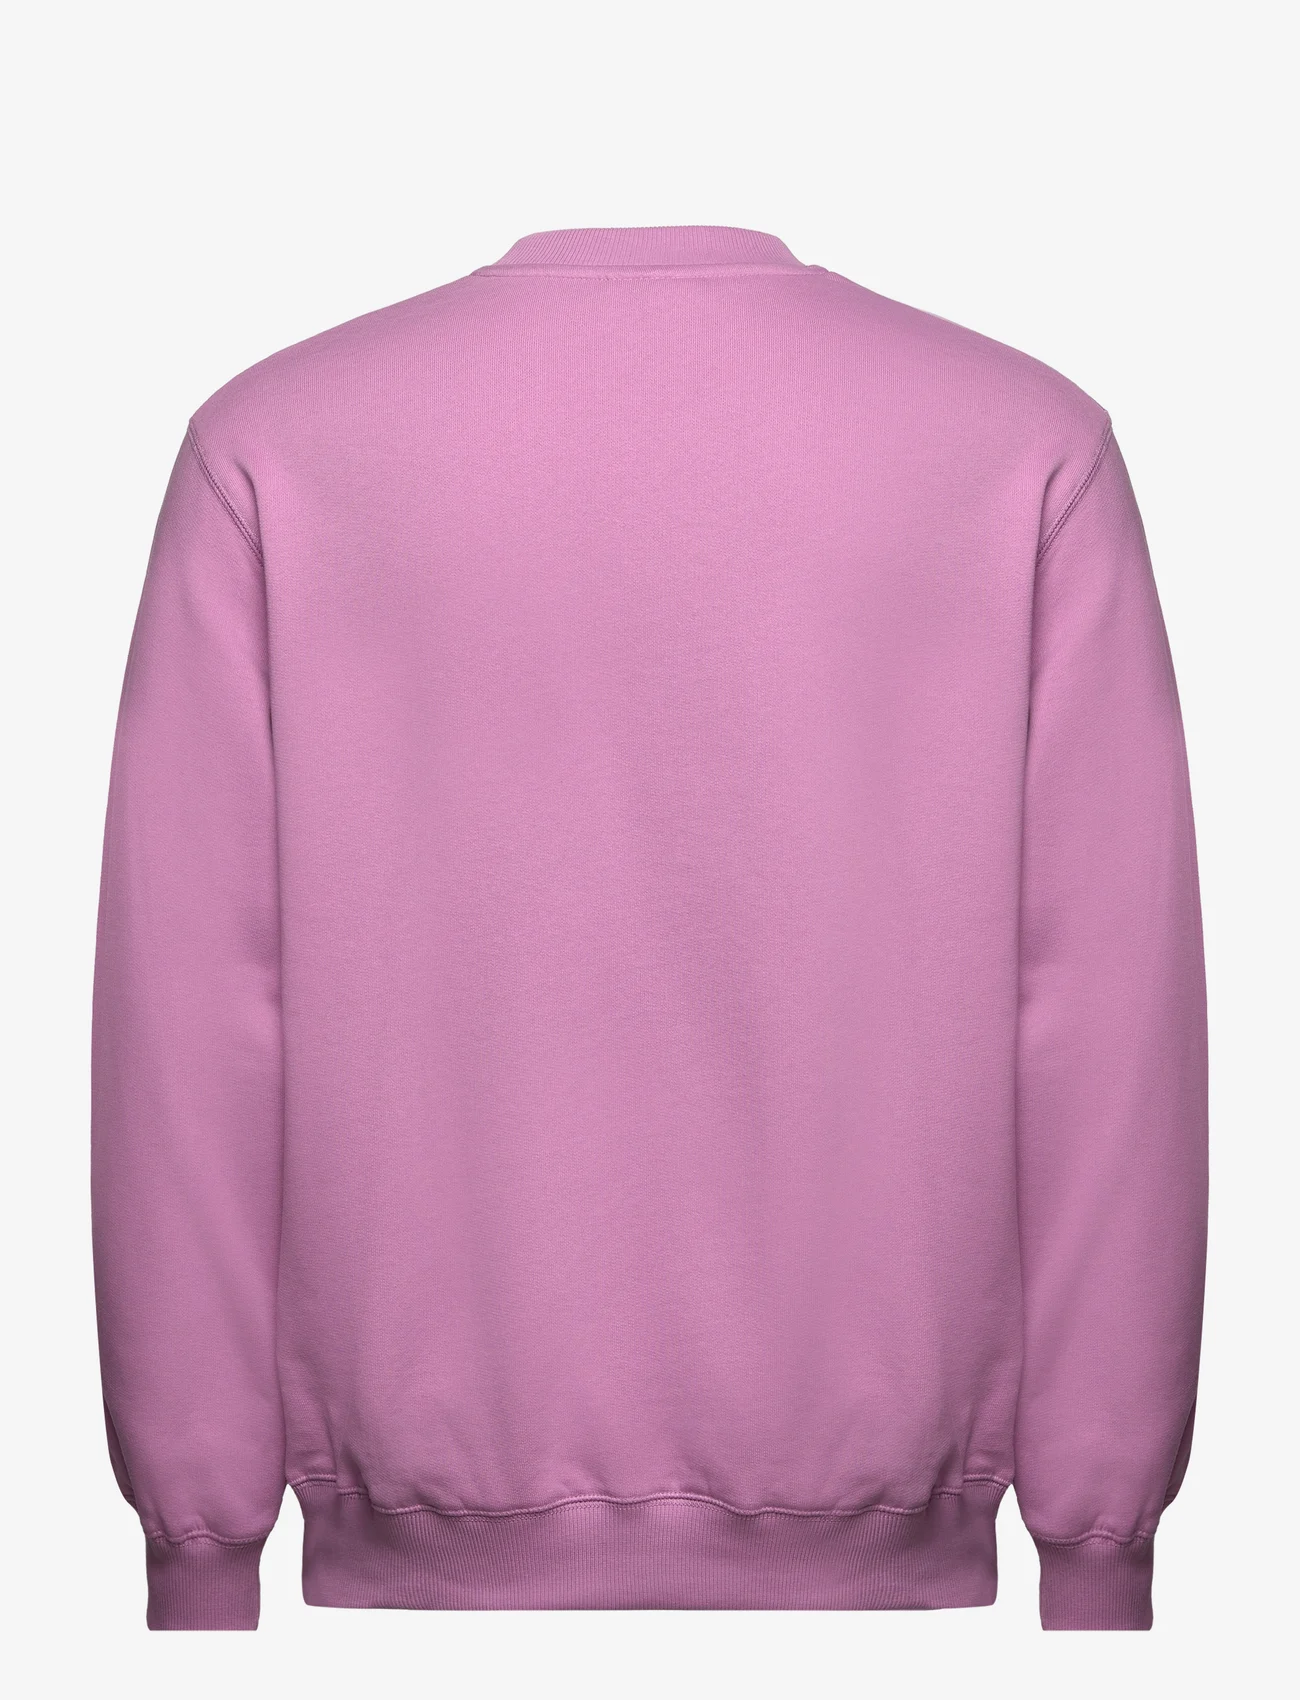 Makia - Laurel sweatshirt - hoodies - peony - 1